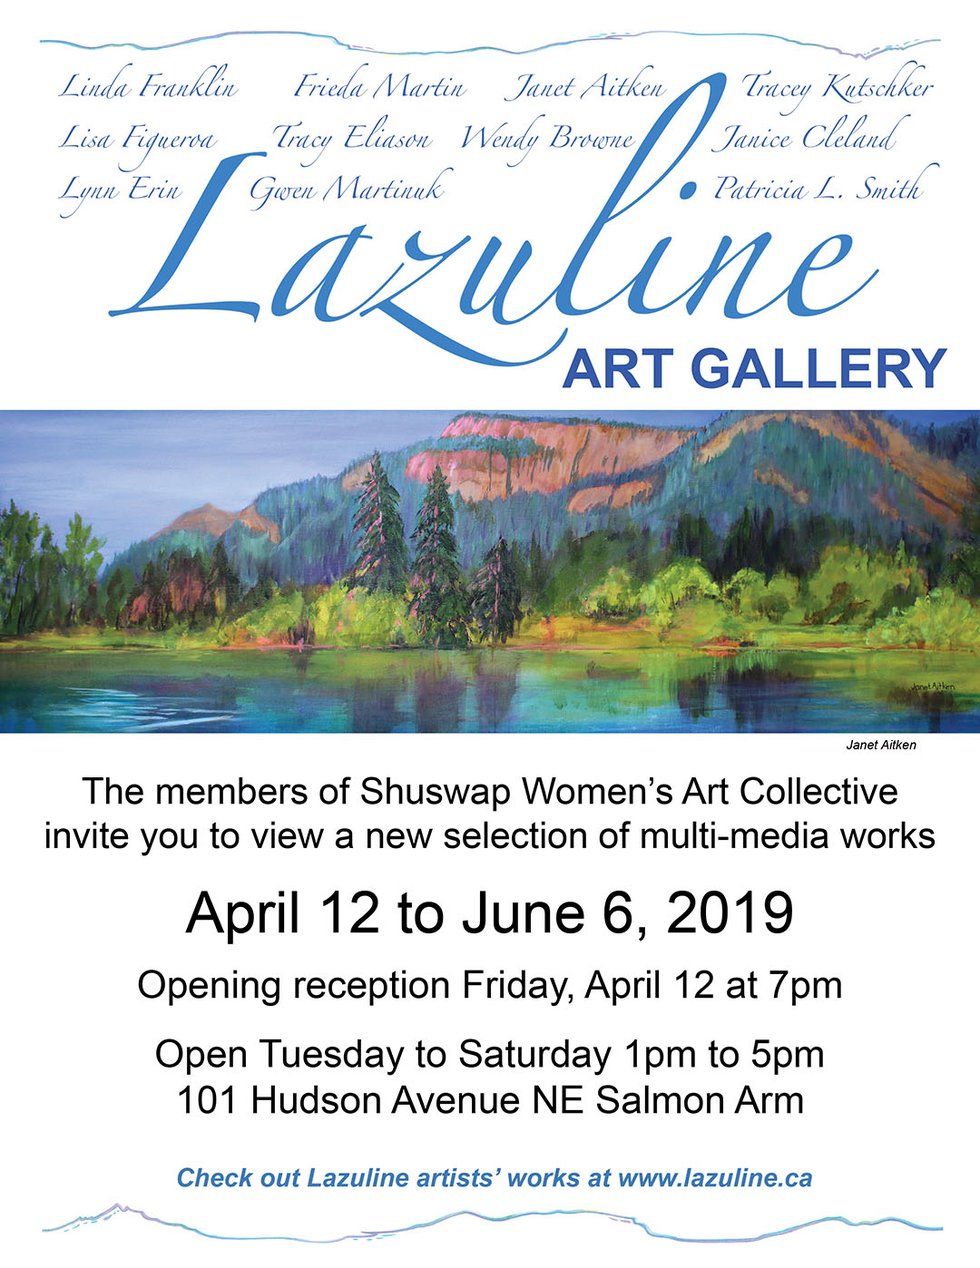 Shuswap Women's Art Collective, "Multi-media works," 2019